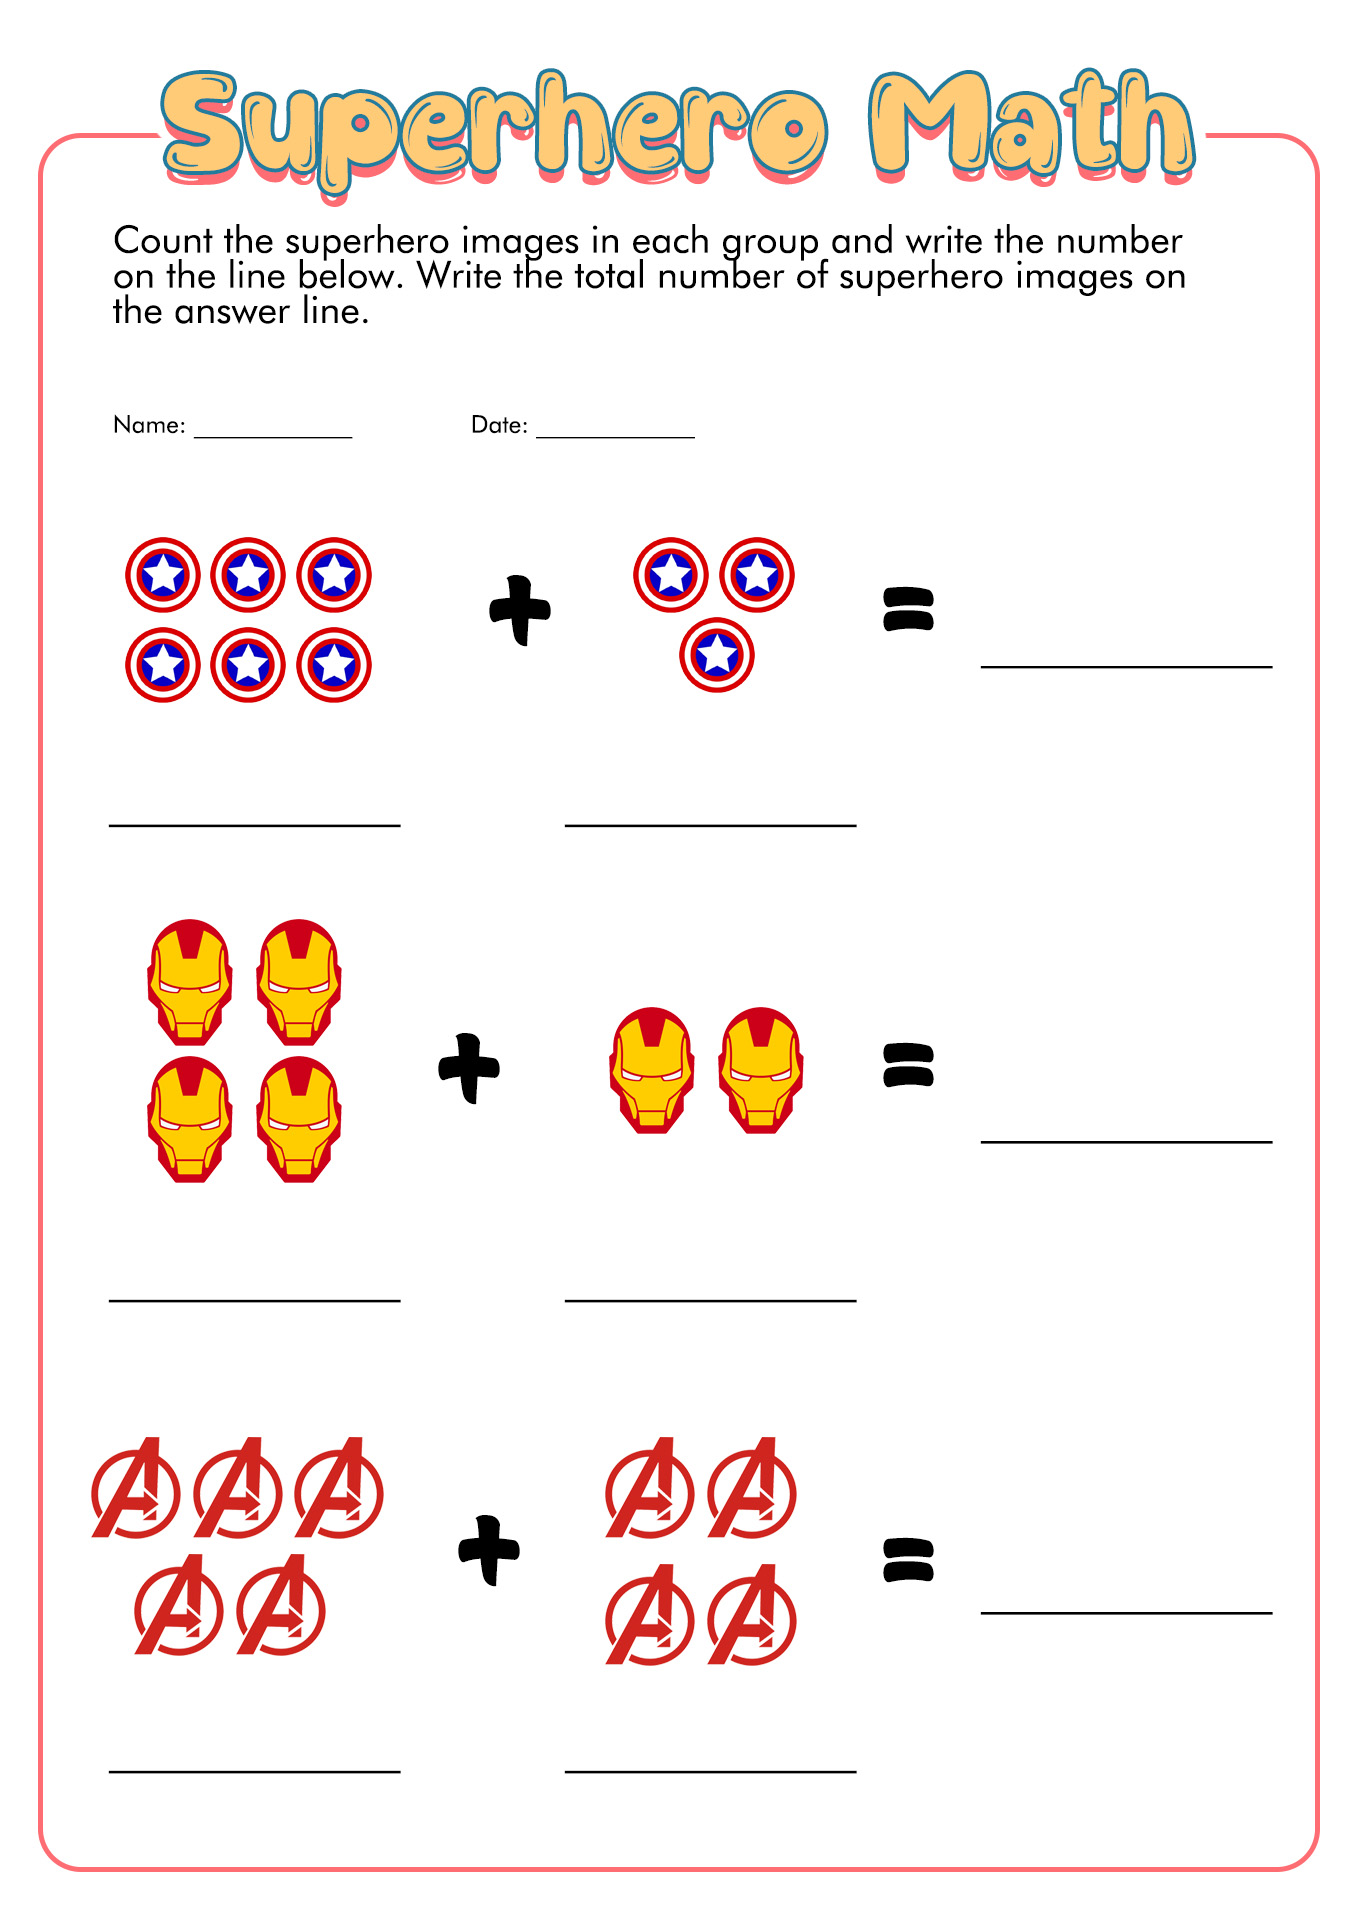 Superhero Math Worksheets Printable Image